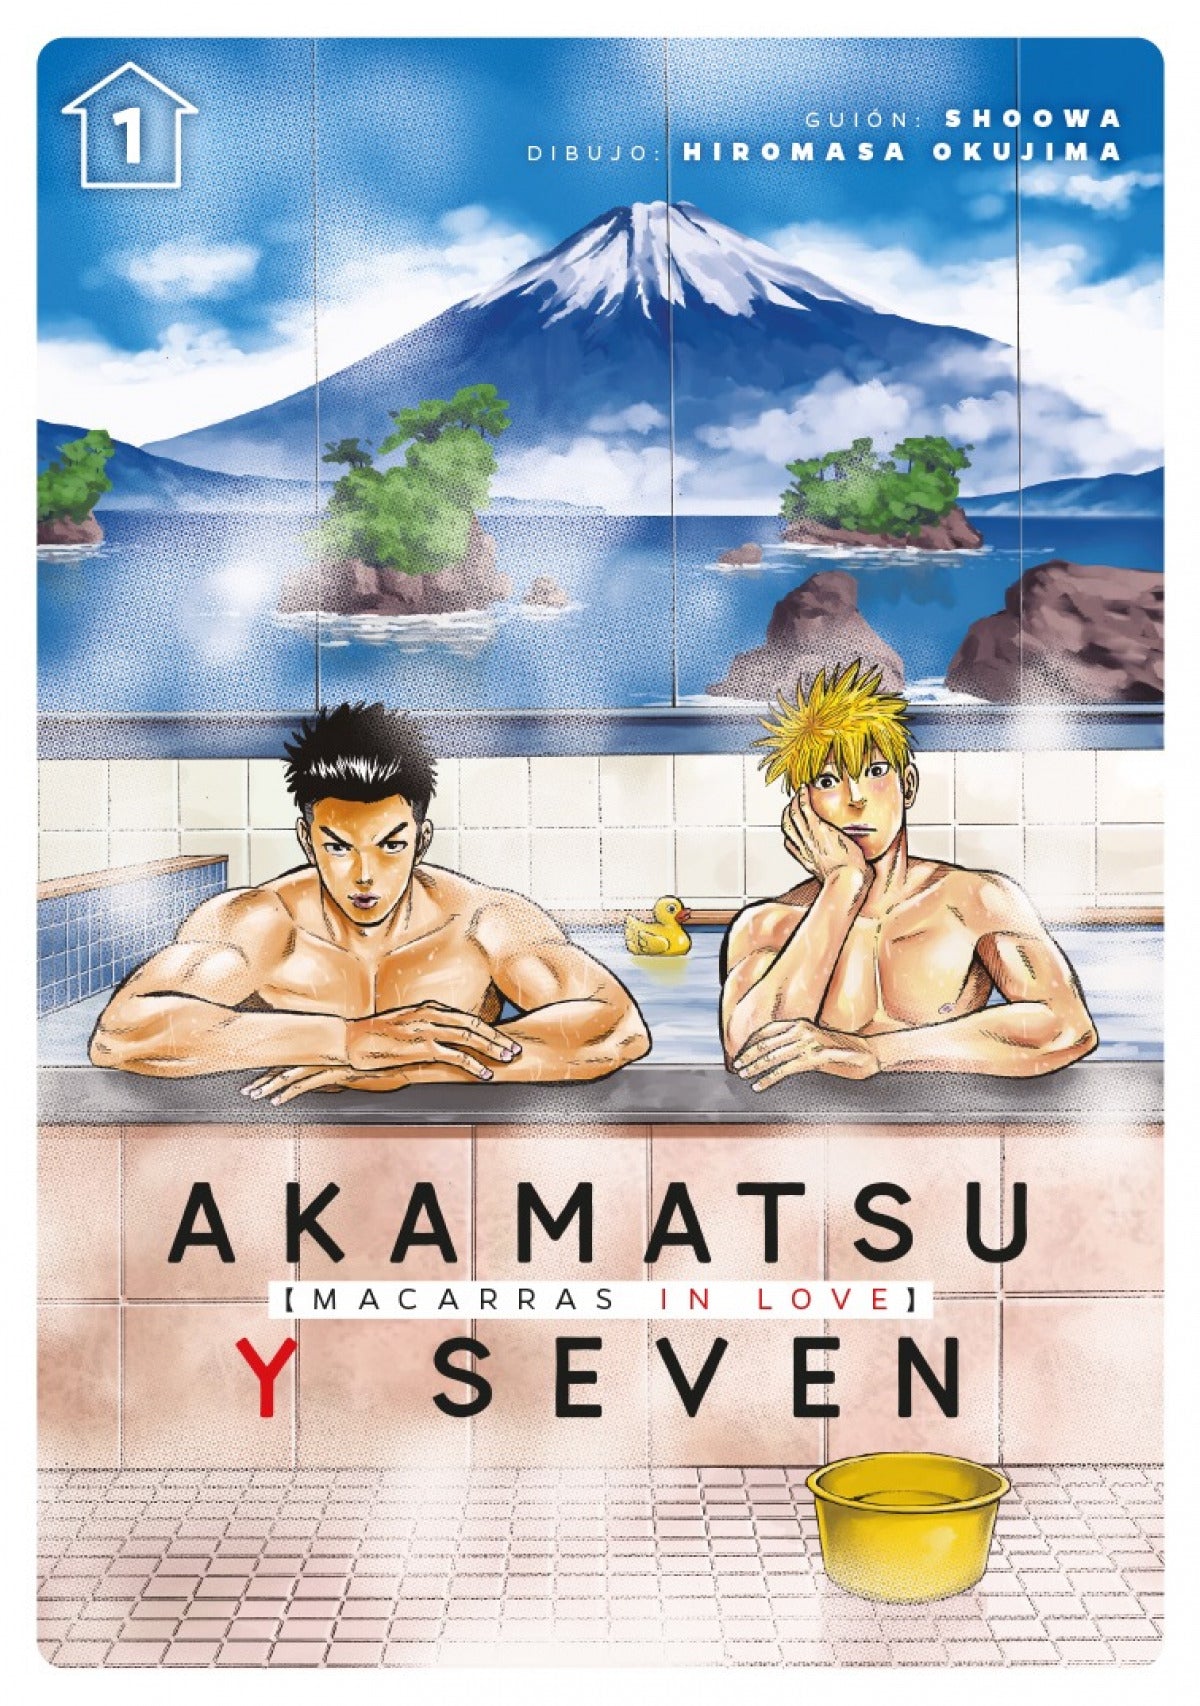 Akamatsu y Seven, macarras in love, vol. 1 de SHOOWA